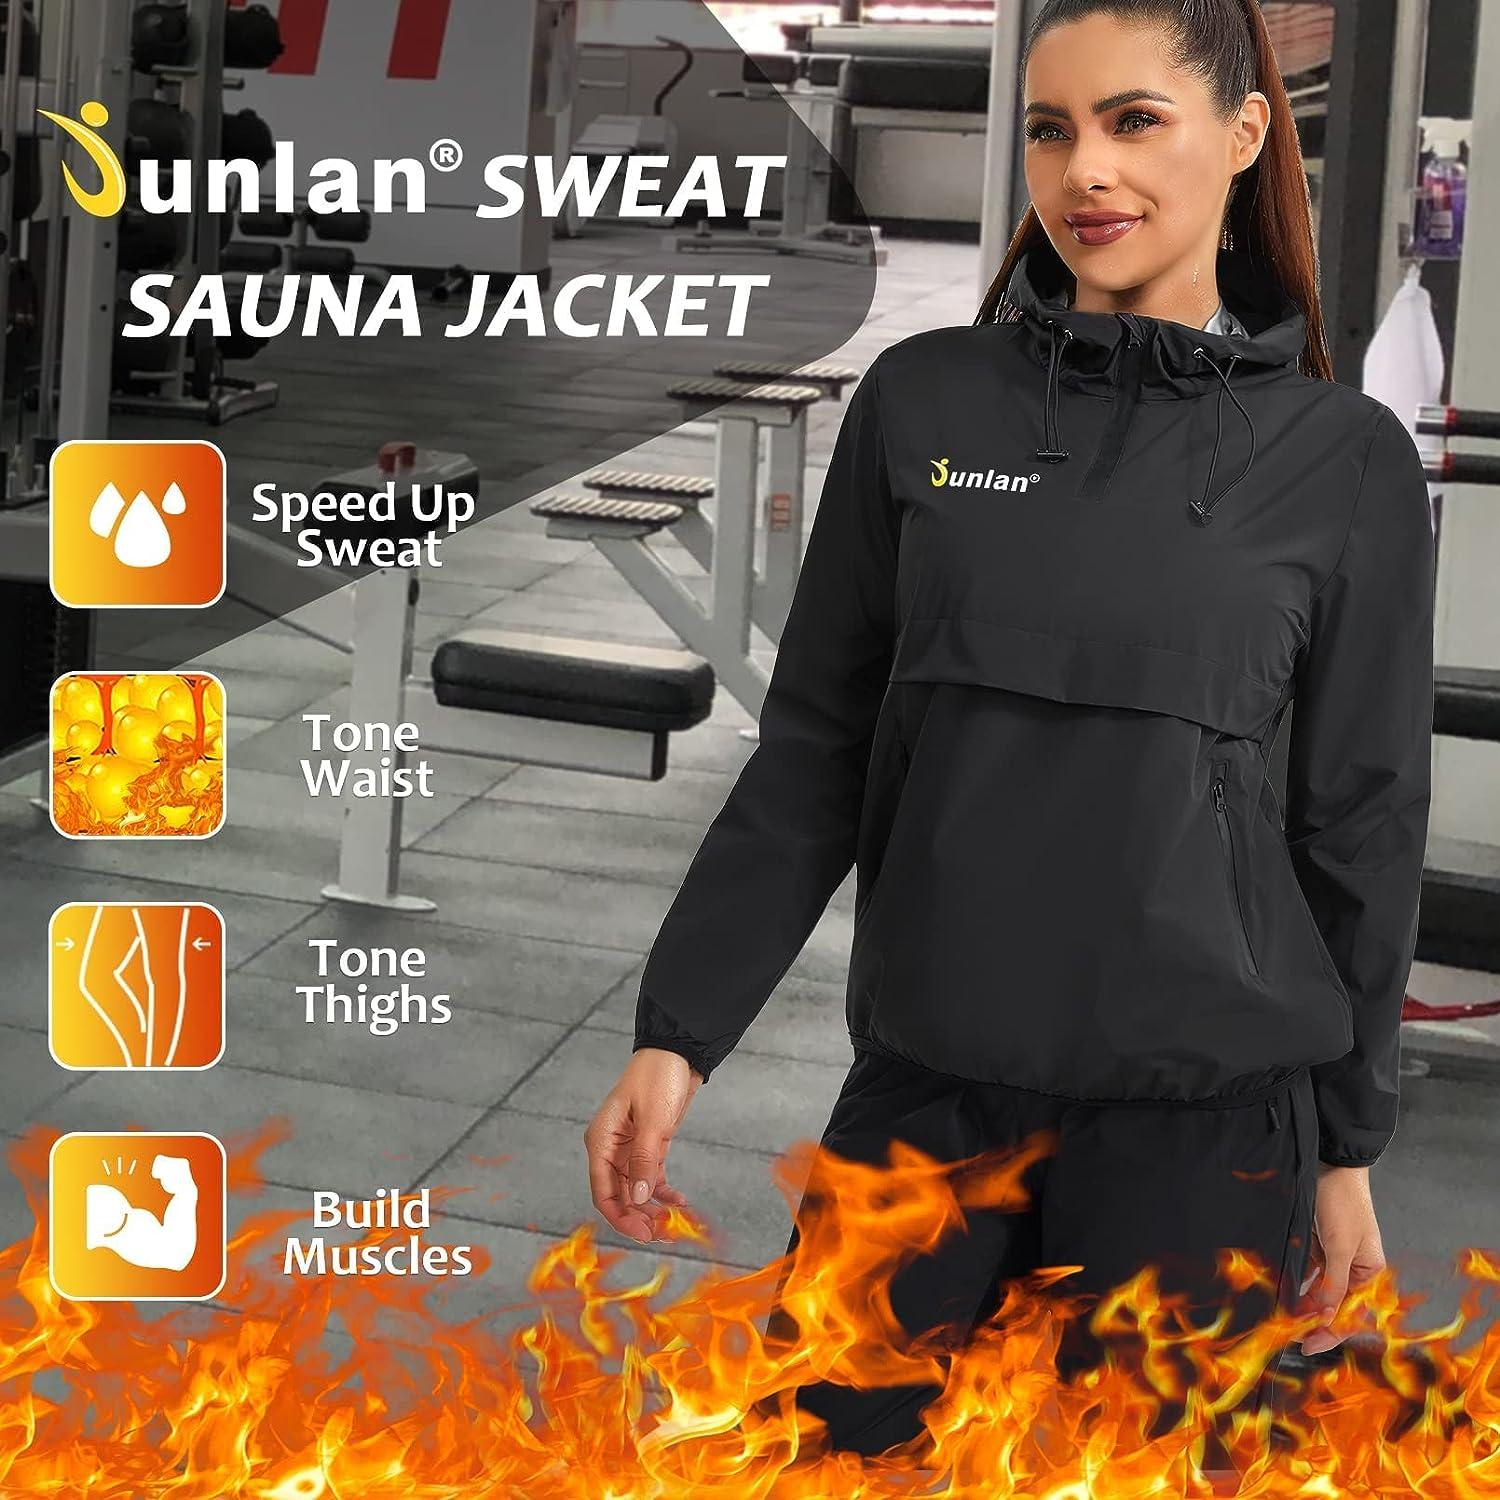  Junlan Sauna Suit For Women Full Body Compression